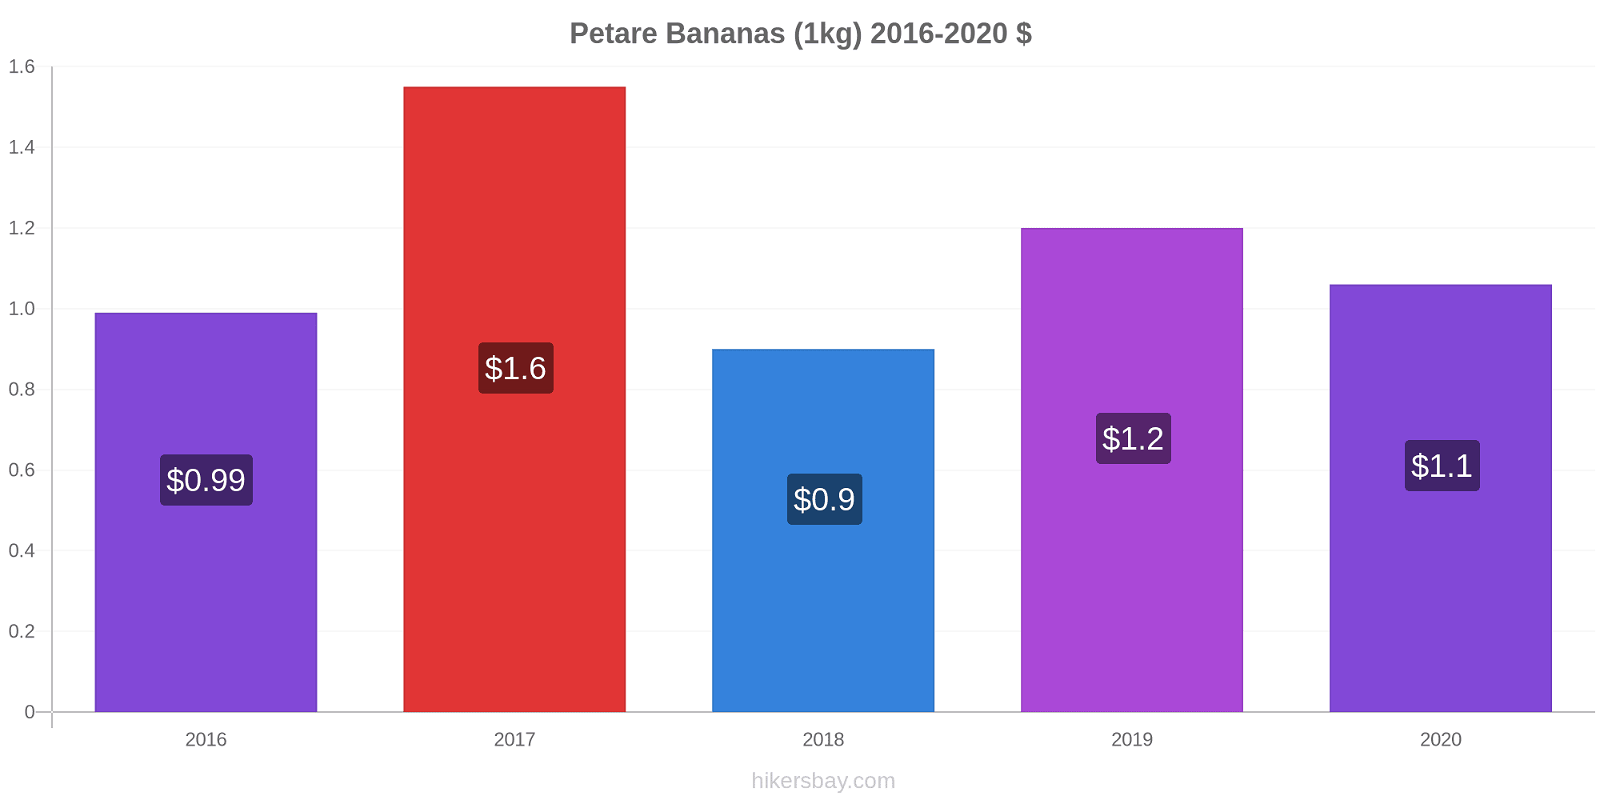 Petare price changes Bananas (1kg) hikersbay.com